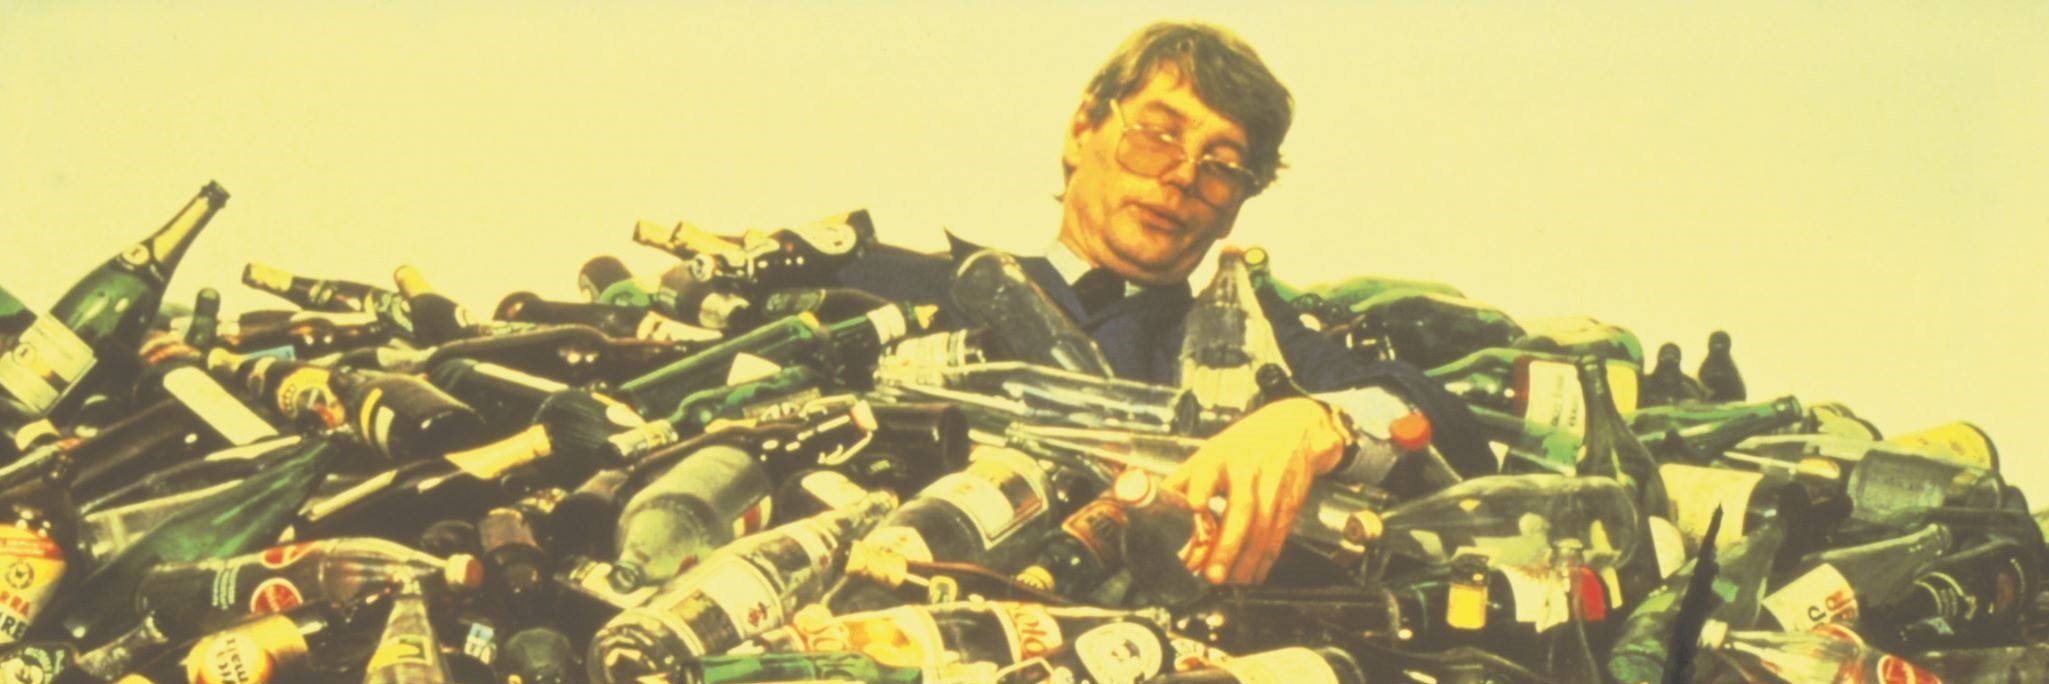 Man drowning in pile of bottles